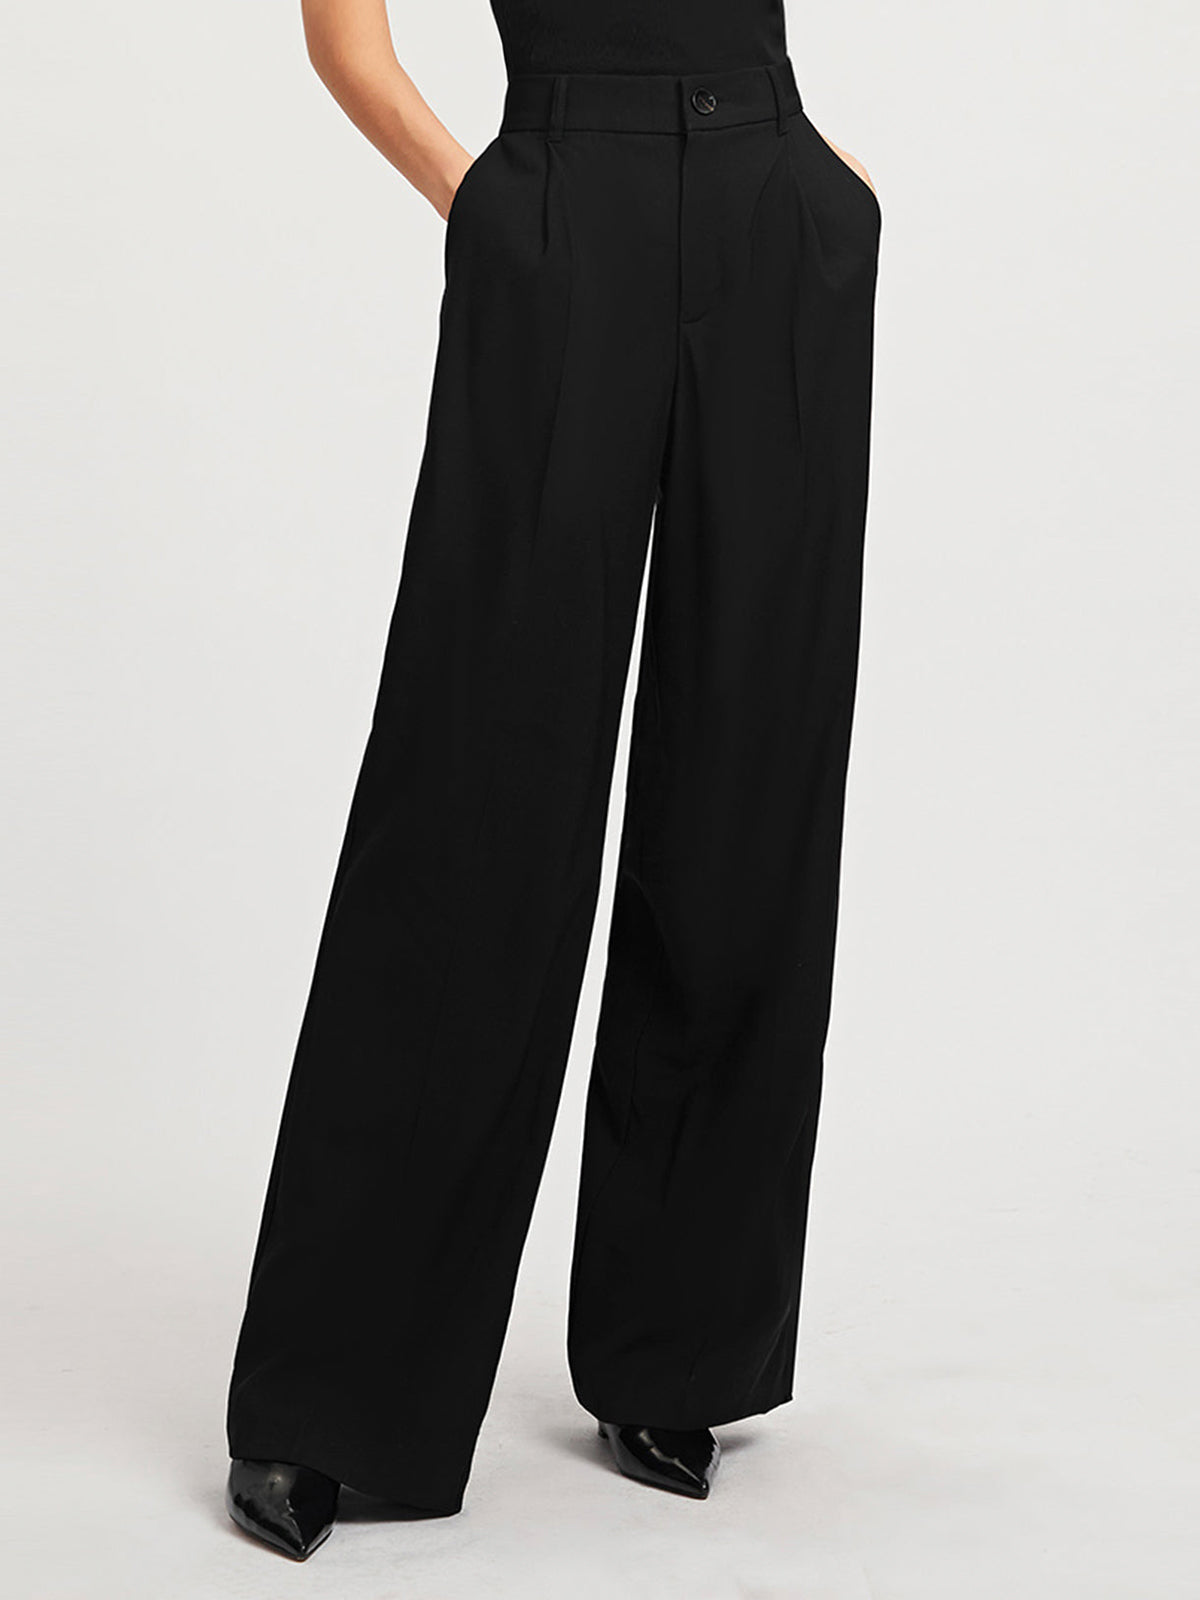 Women's N21 Pants: Stylish & Comfy - Shop Now!